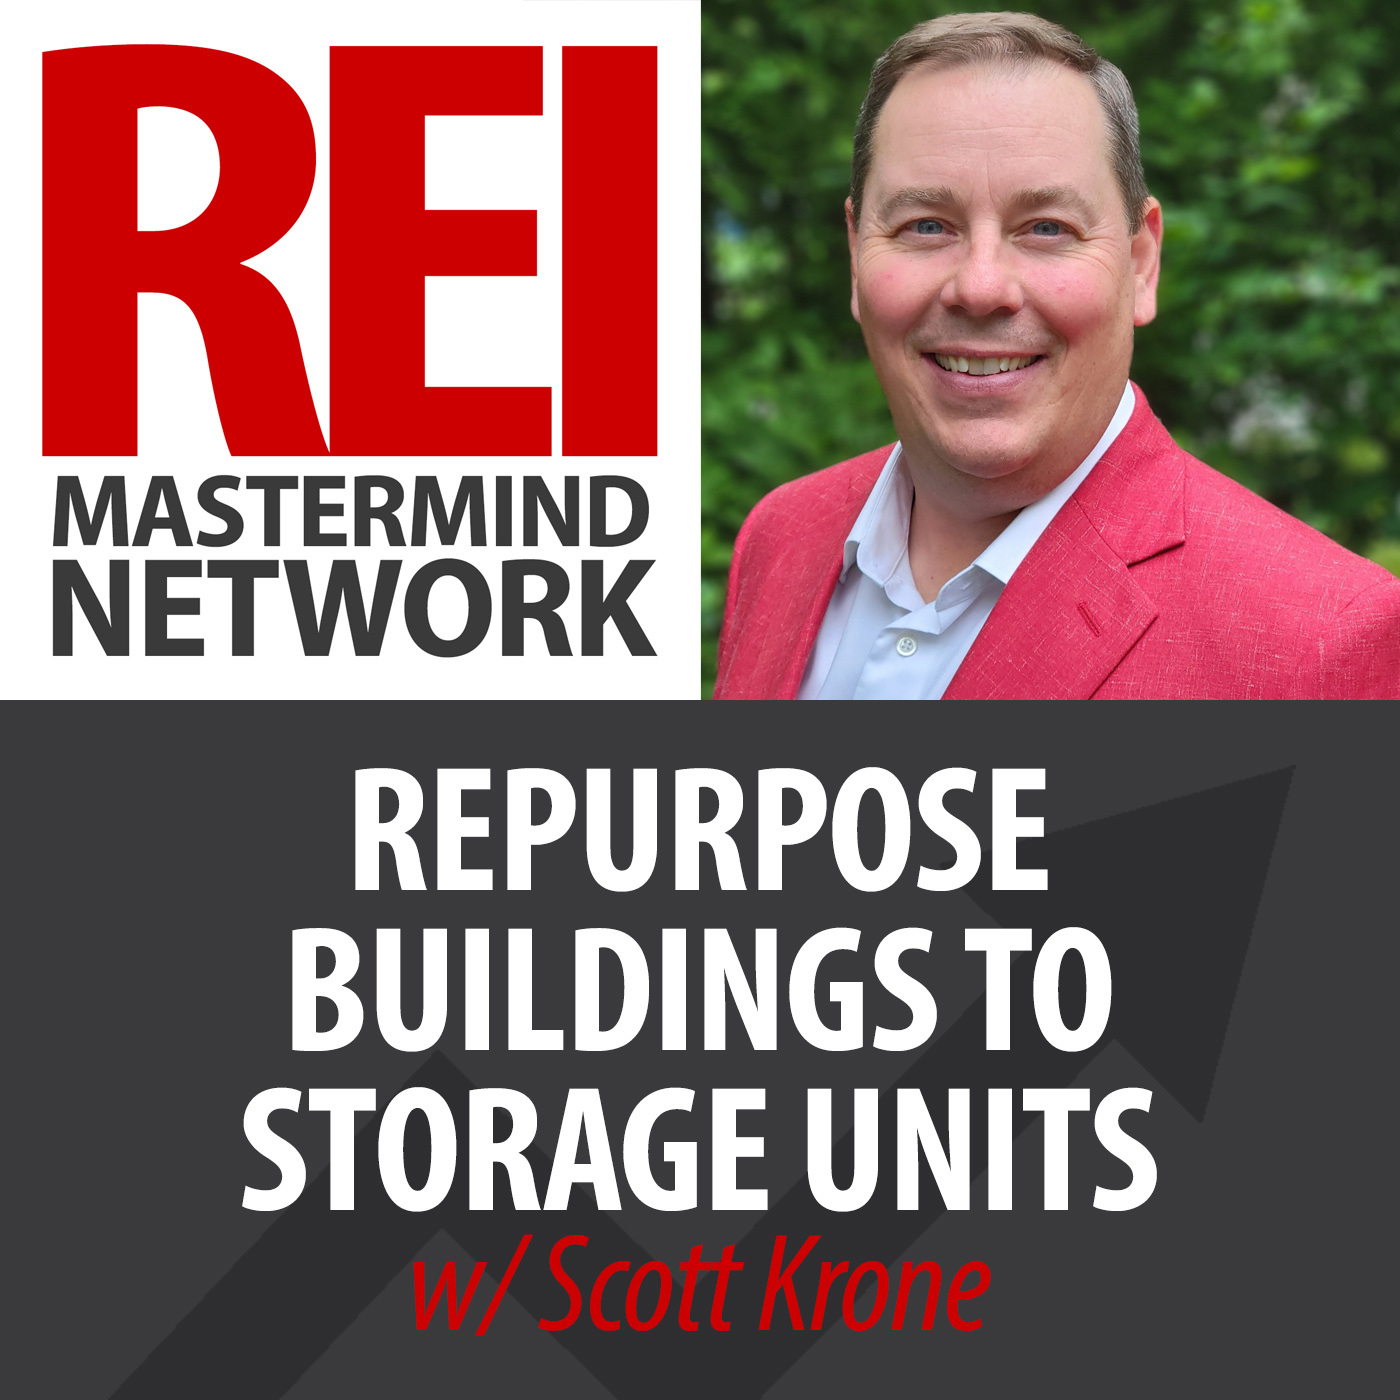 Repurpose Buildings to Storage Units with Scott Krone Image